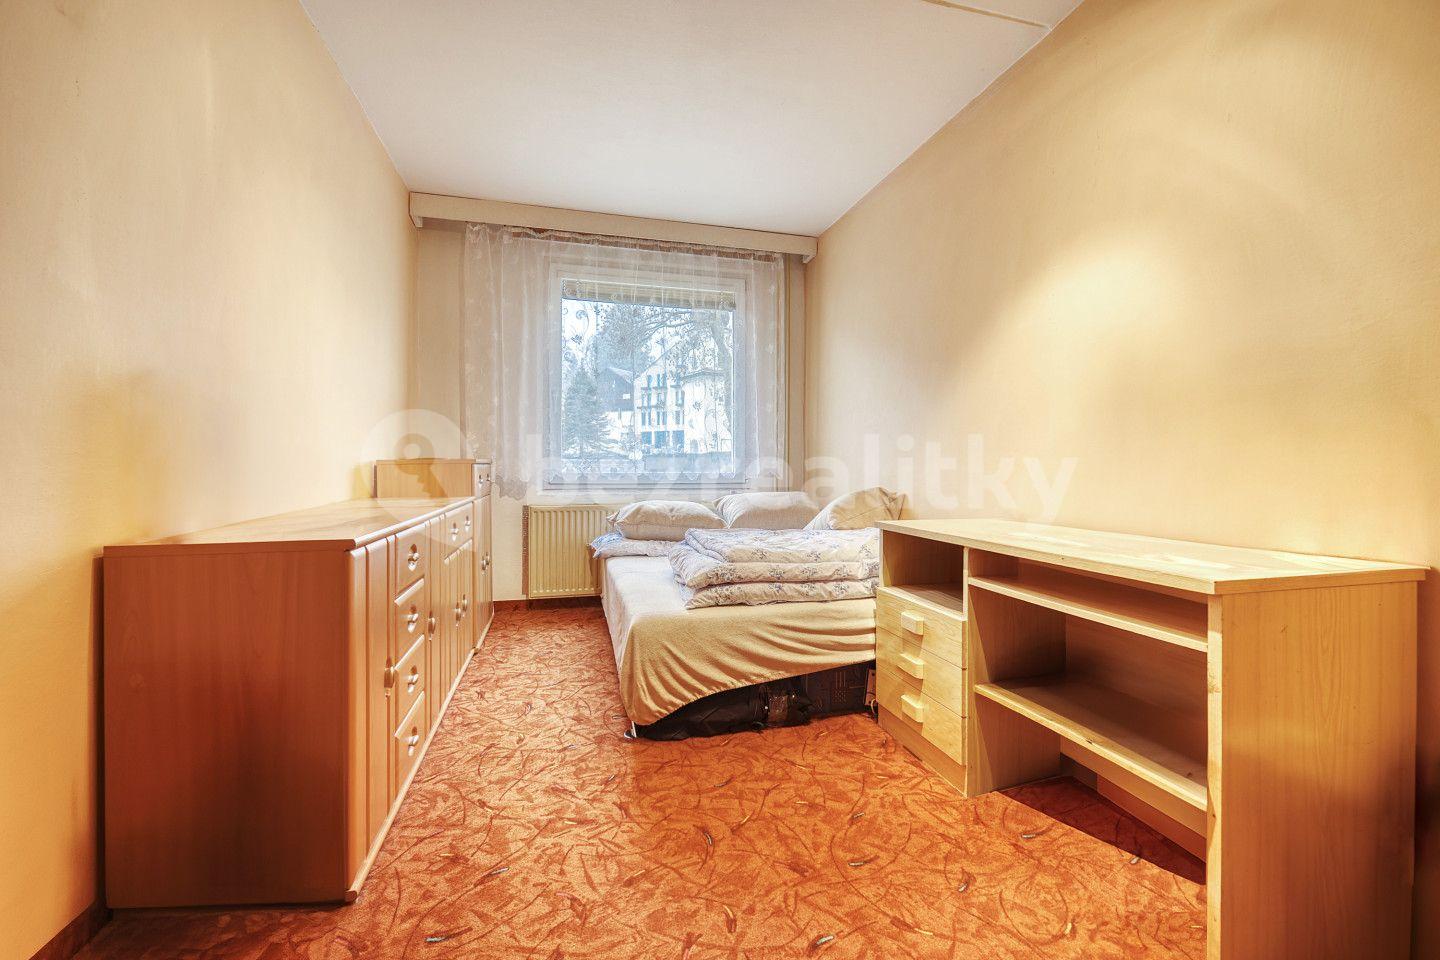 3 bedroom flat for sale, 70 m², U Řezné, Železná Ruda, Plzeňský Region